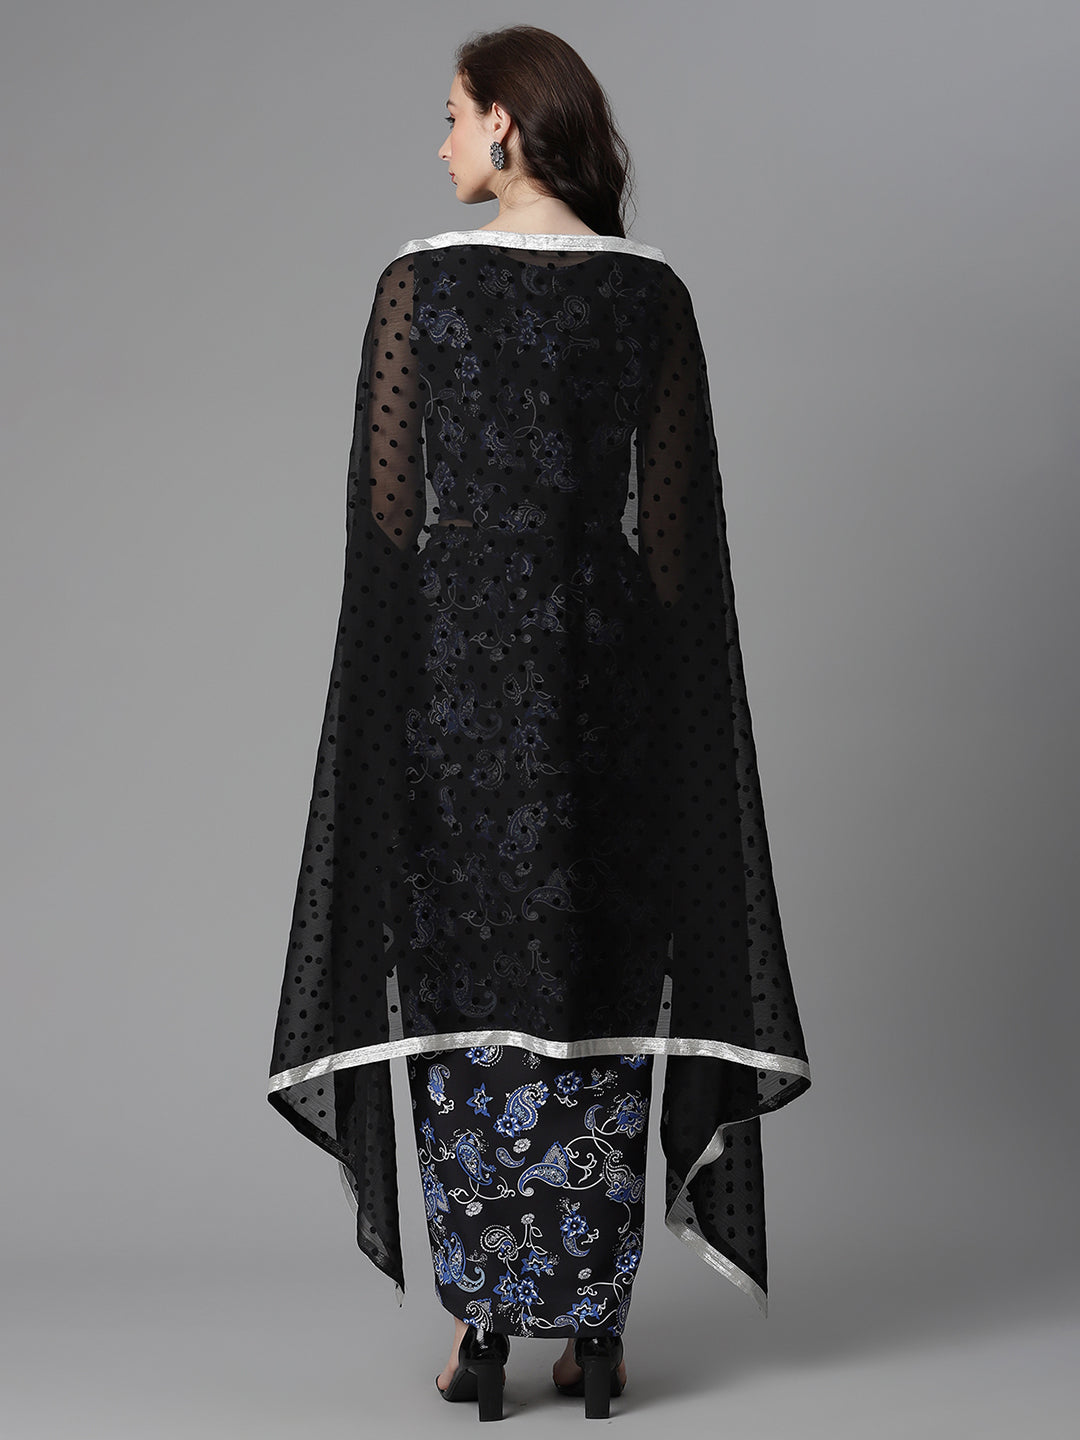 Women's Black Crepe Printed Top, Skirt & Shrug By Ahalyaa - 3Pc Set